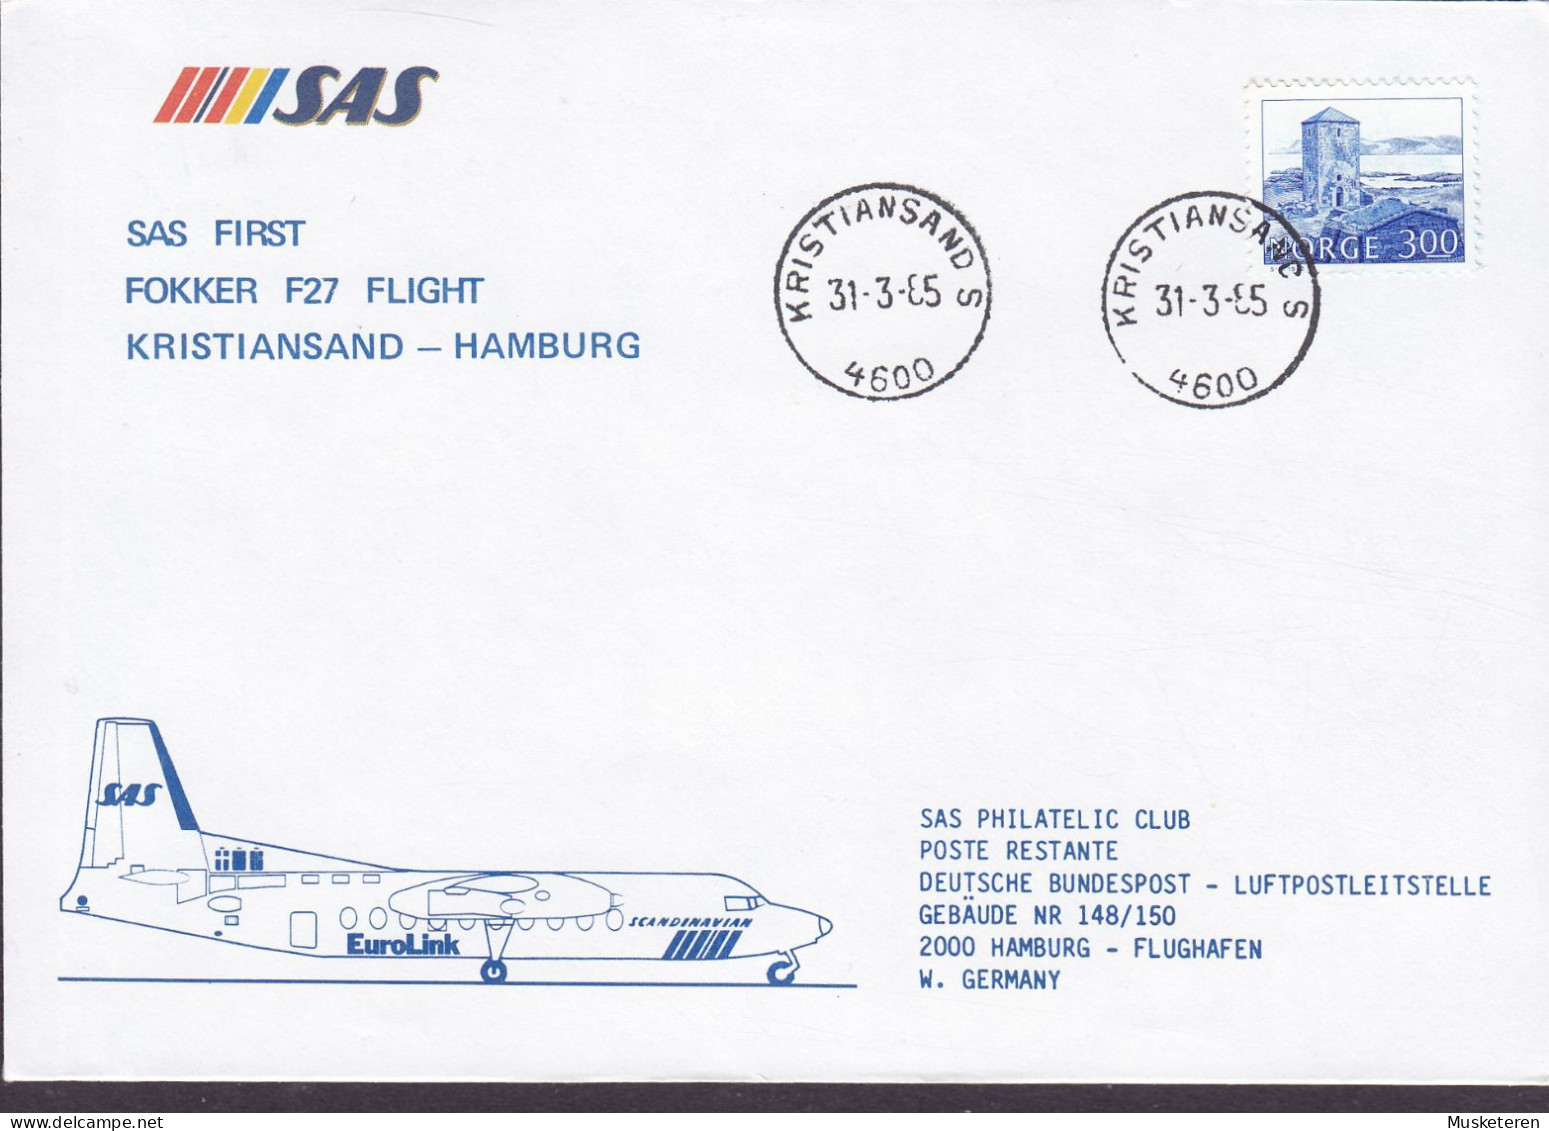 Norway SAS First Fokker F27 Flight KRISTIANSAND-HAMBURG 1985 Cover Brief Lettre Kloster Selje, Selja Stamp - Covers & Documents